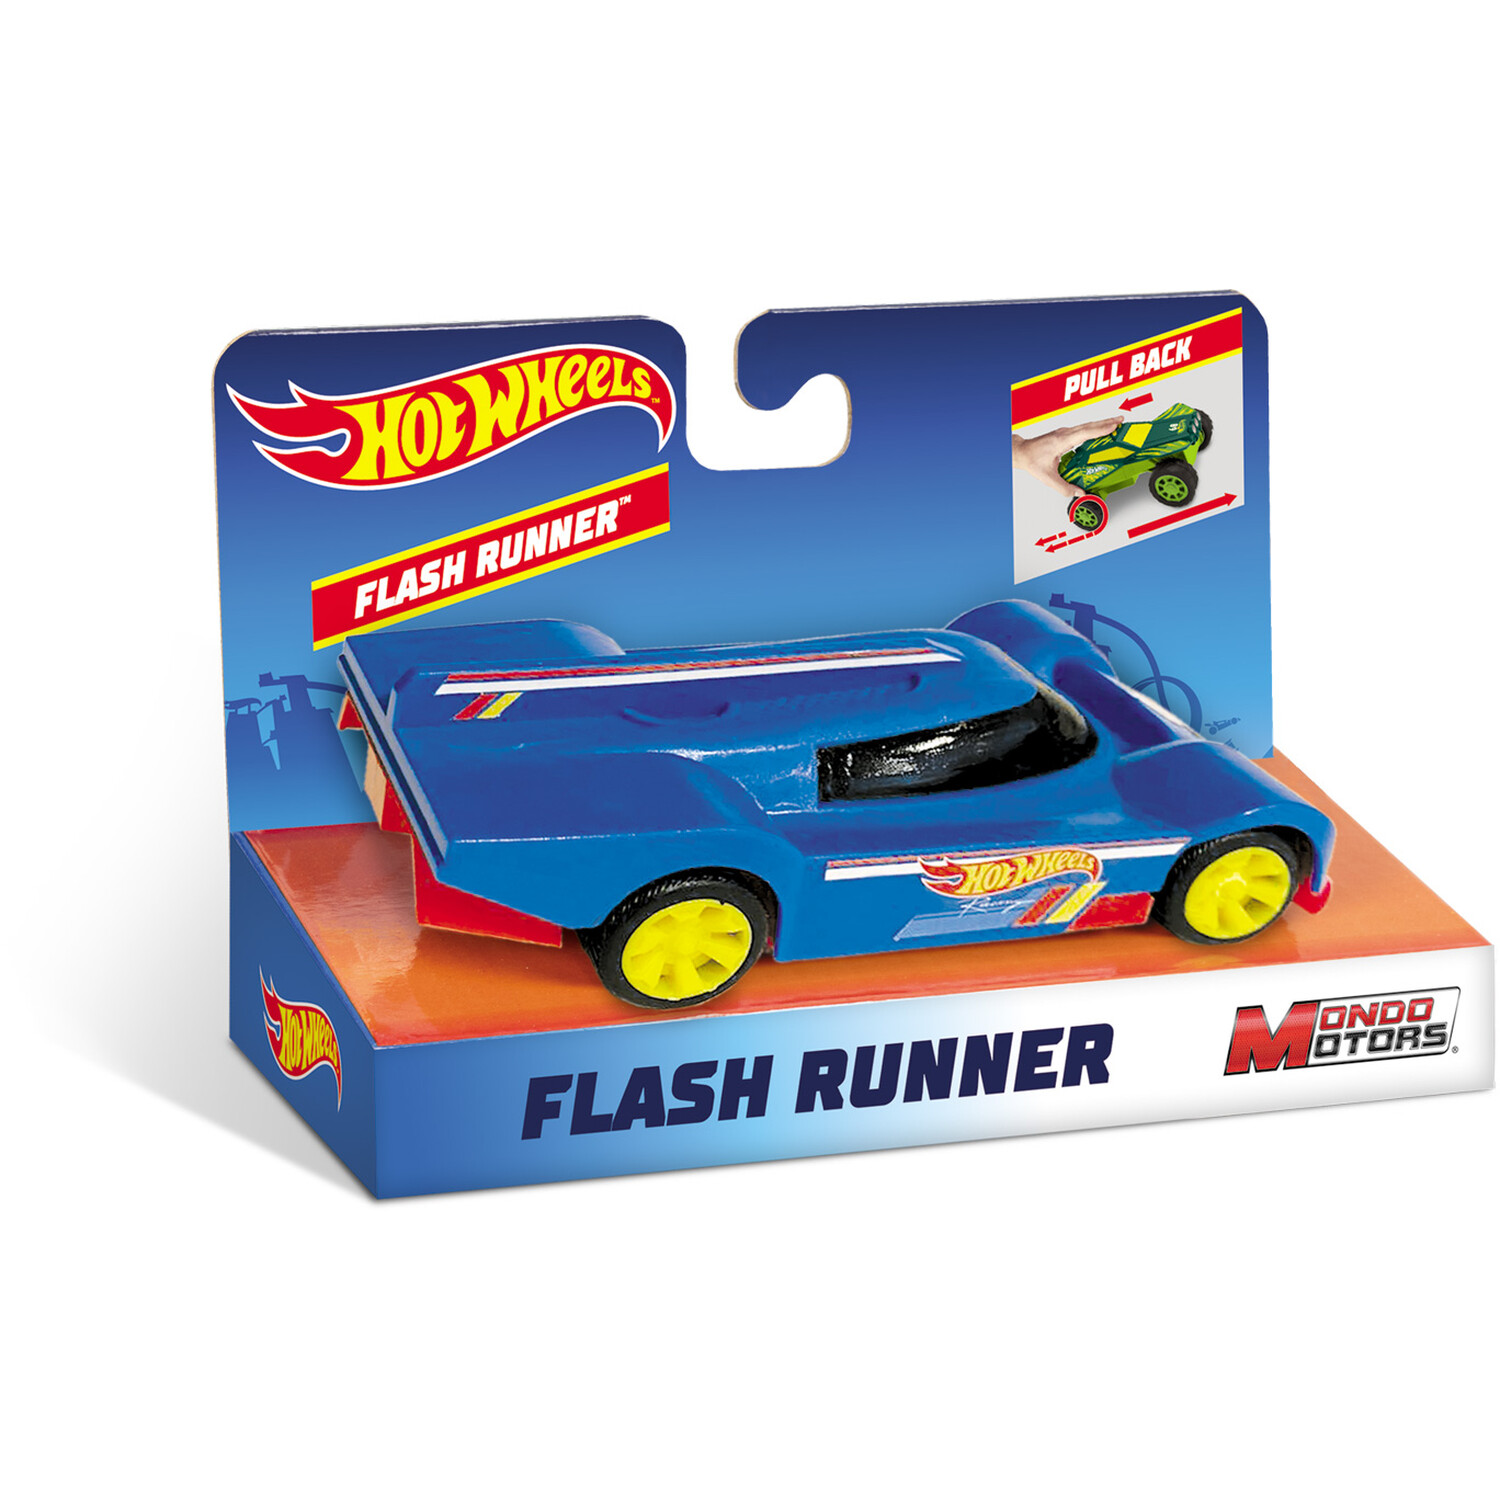 Hot Wheels 5" Flash Runner Image 1